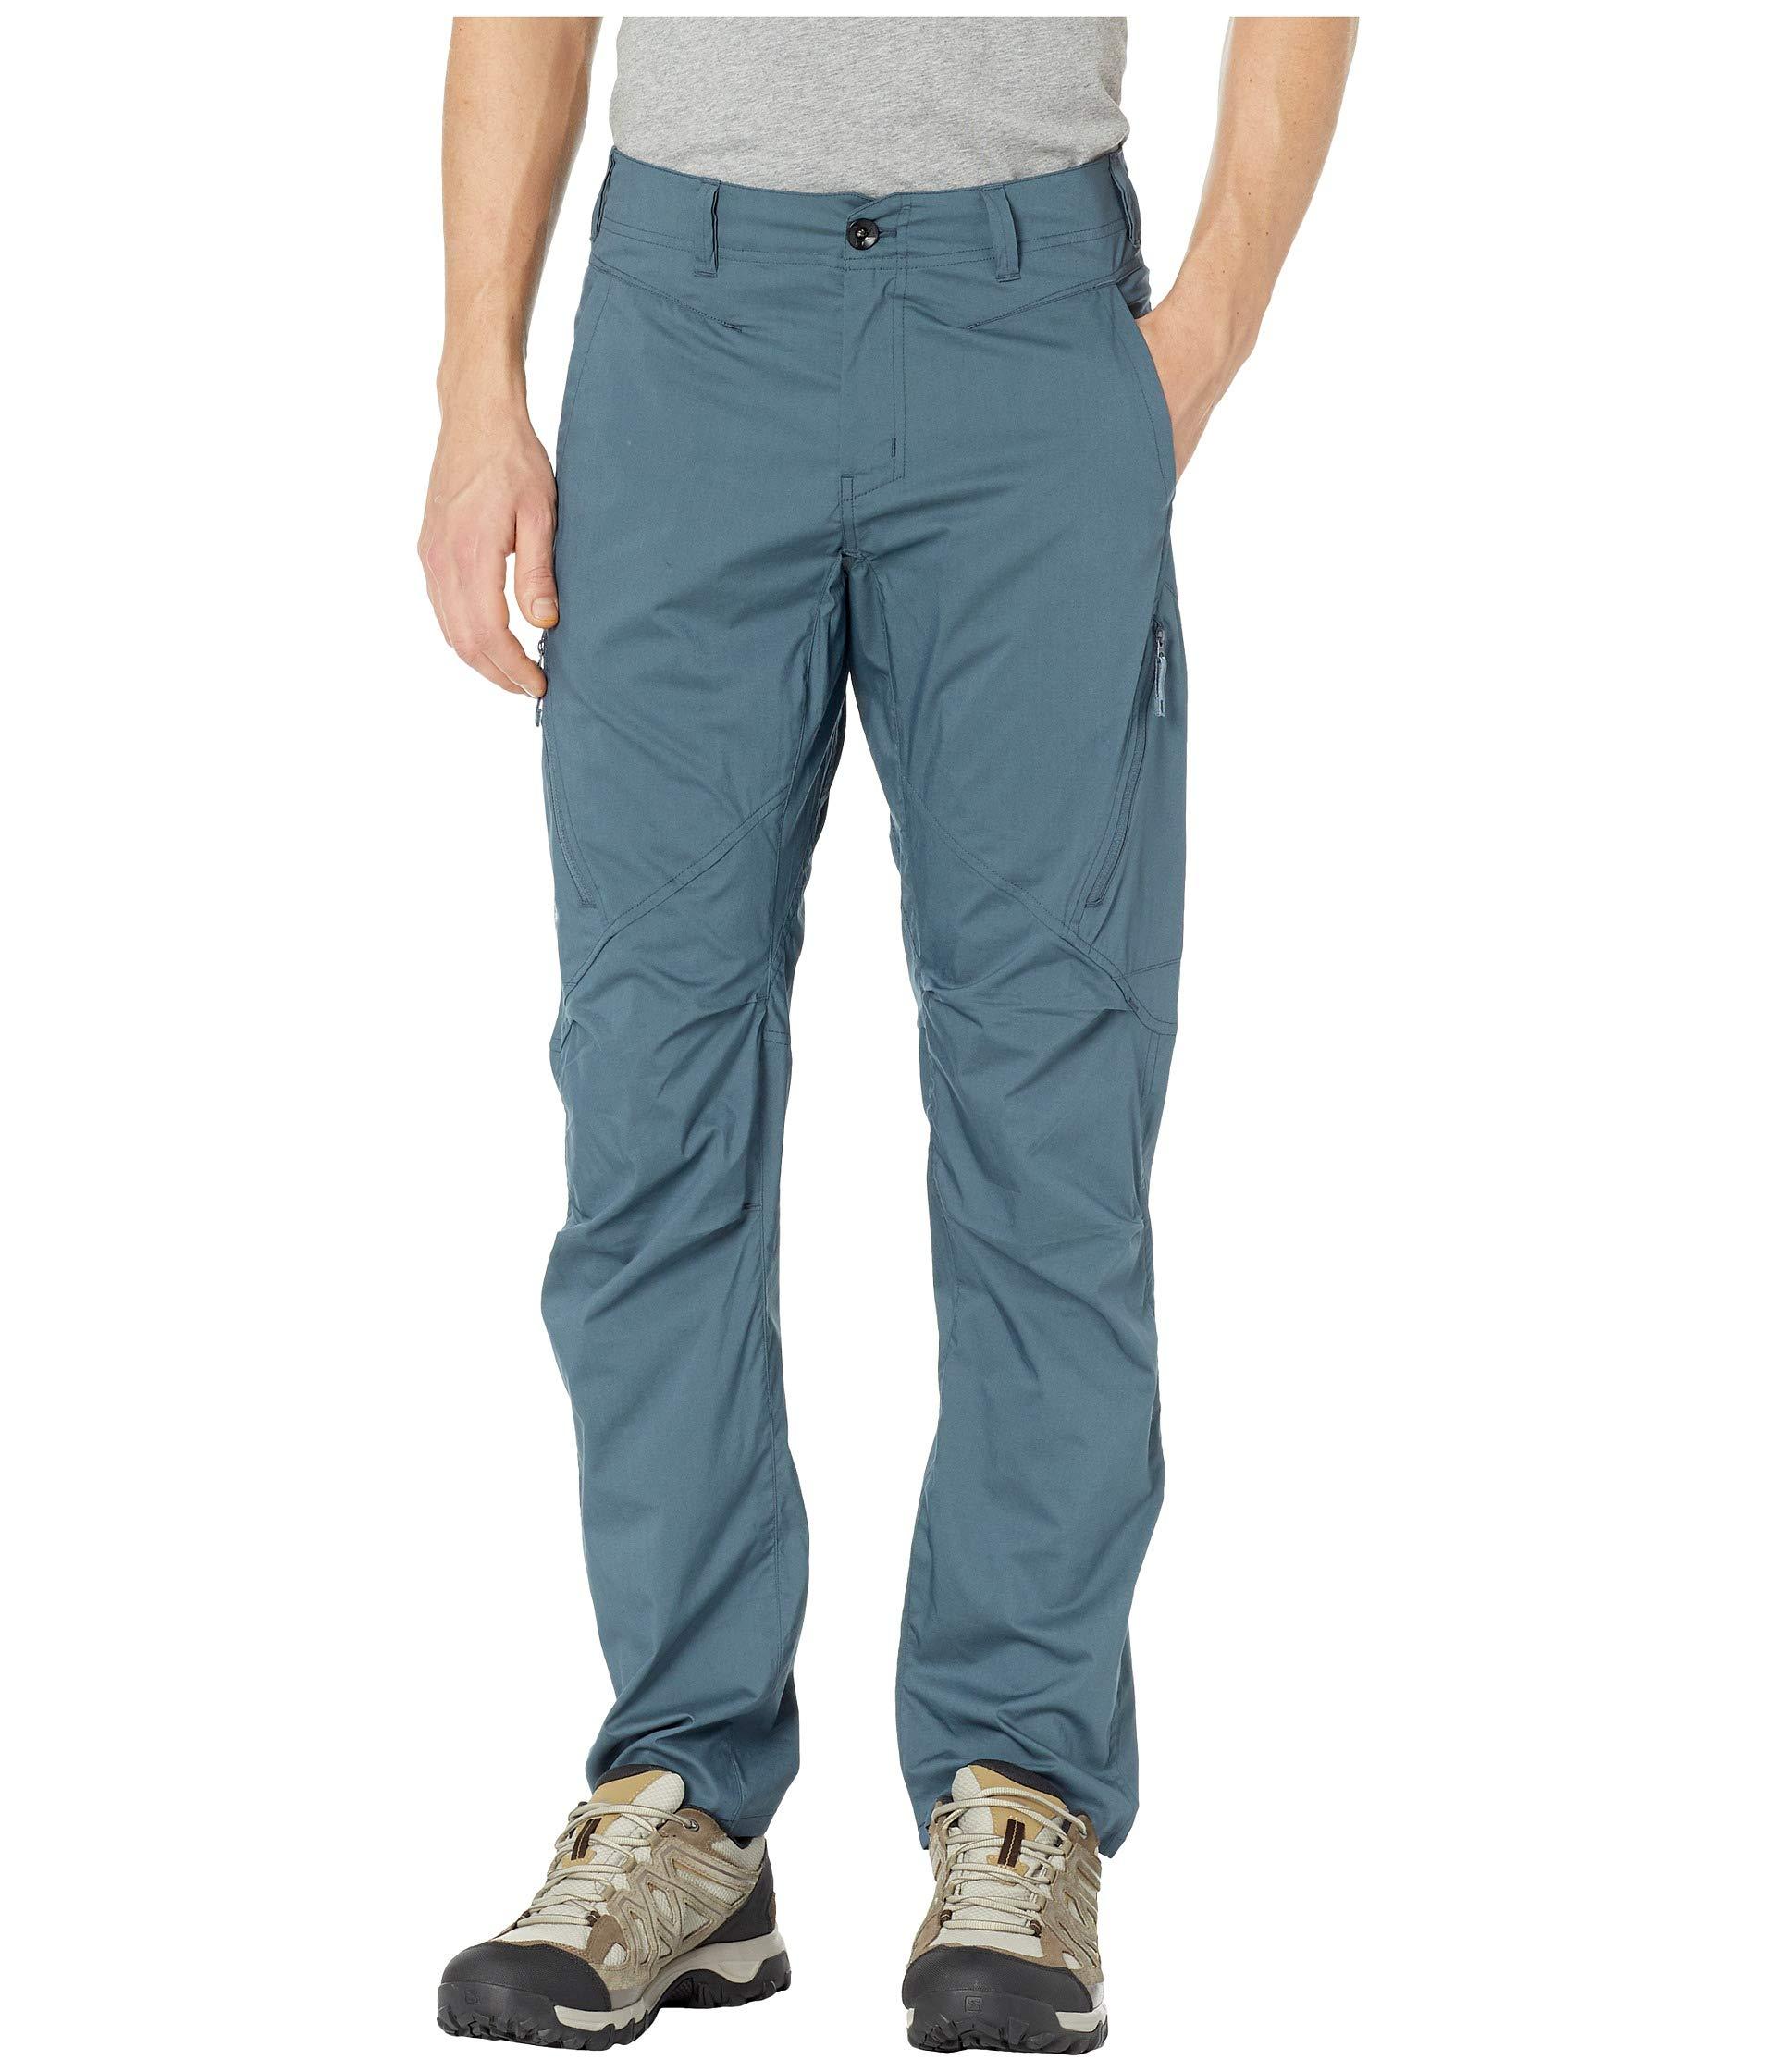 Lyst - Arc'teryx Stowe Pants (neptune) Men's Casual Pants in Blue for Men